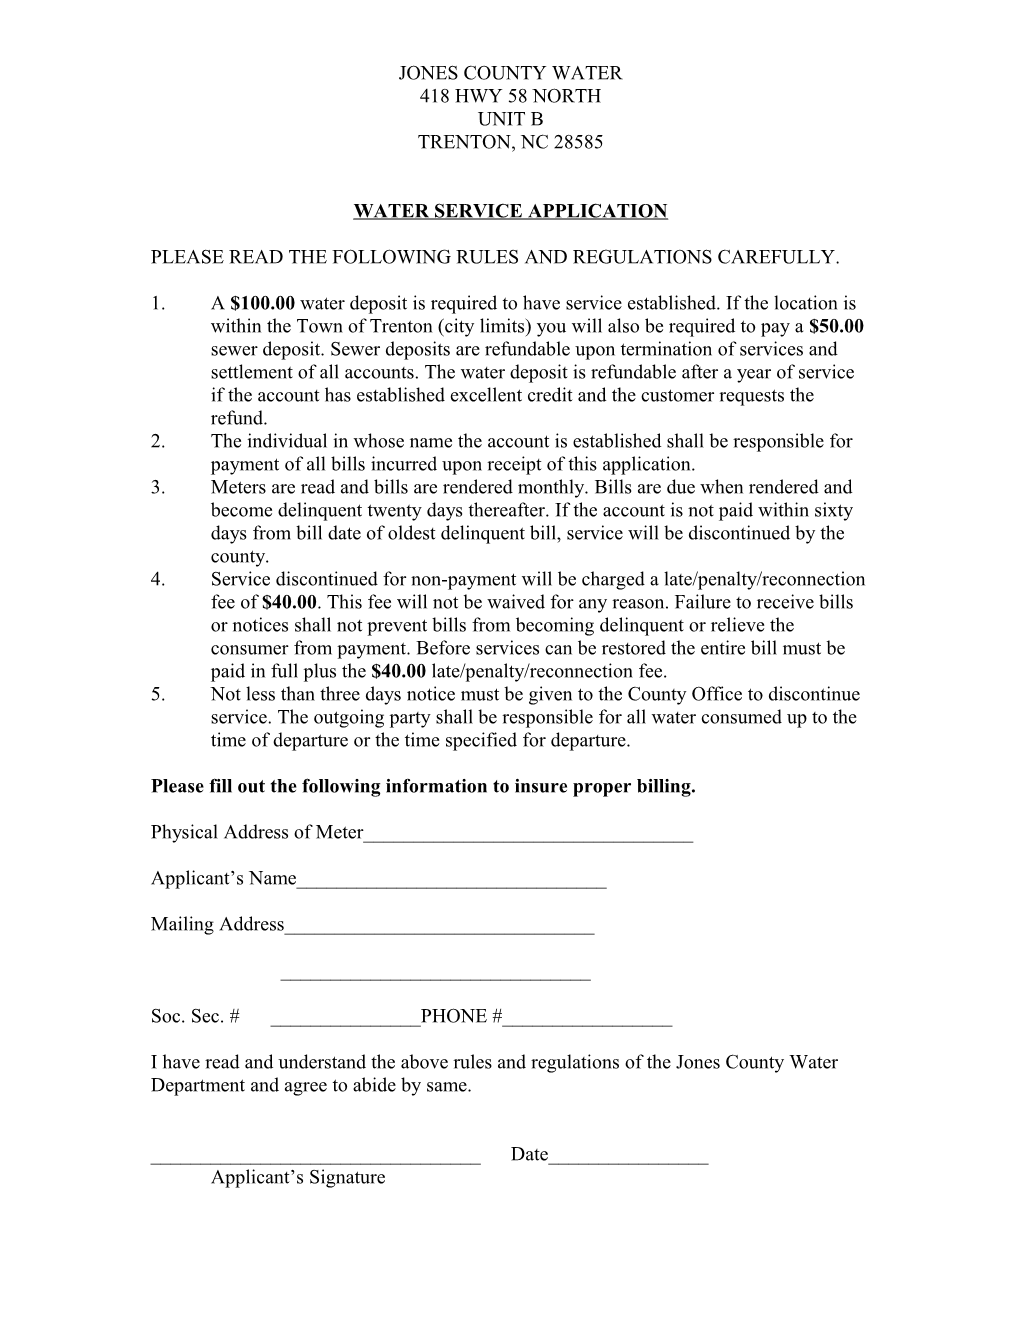 Jones County Water Service Application